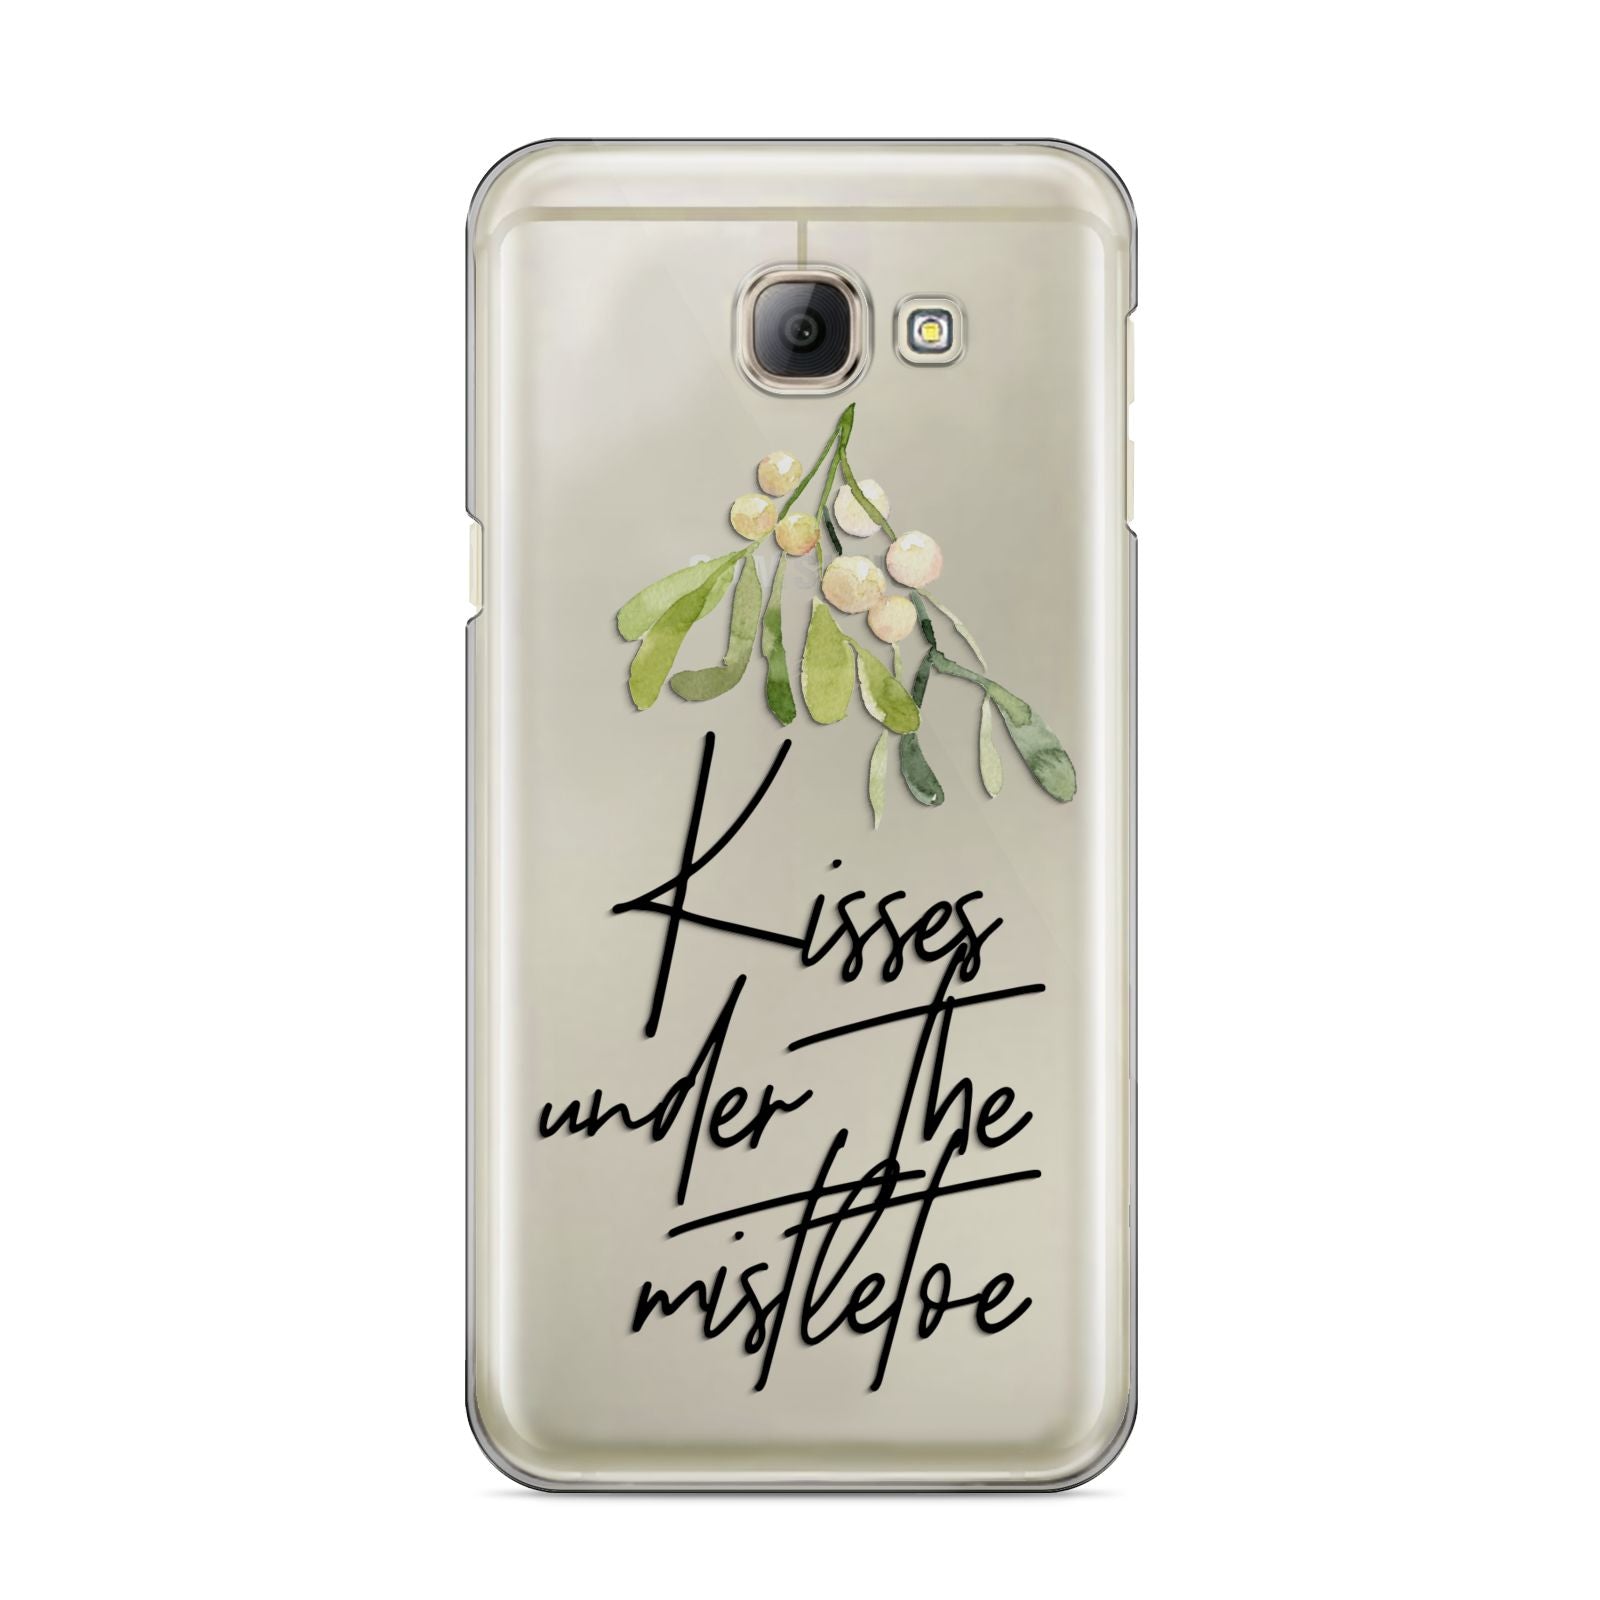 Kisses Under The Mistletoe Samsung Galaxy A8 2016 Case